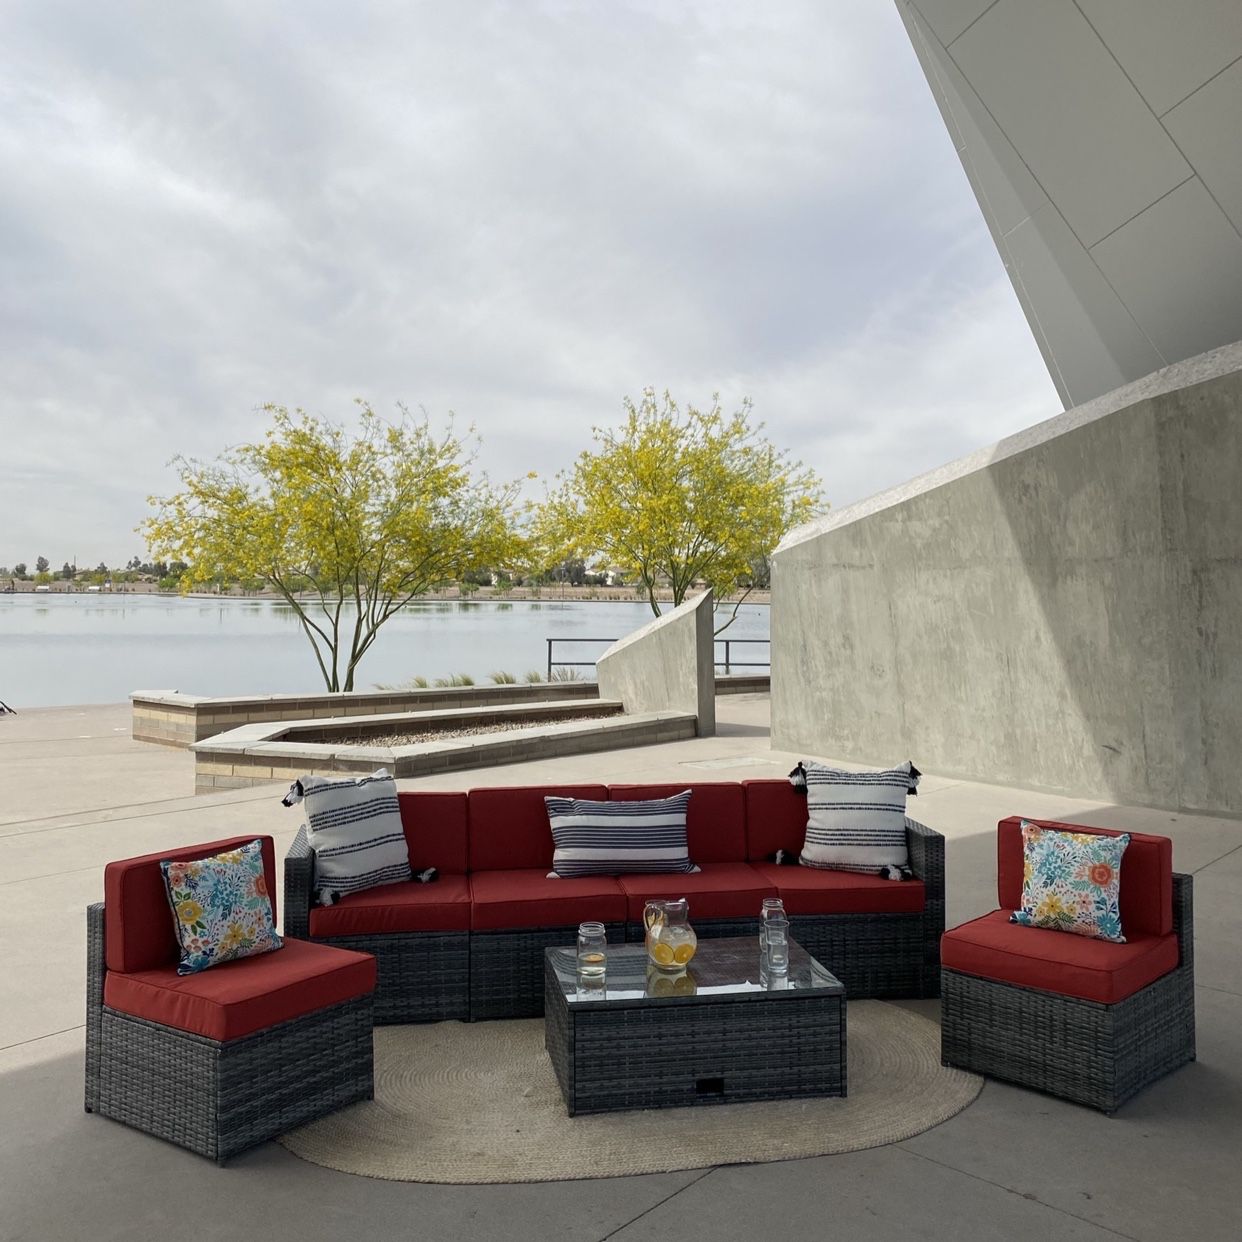 Patio set, outdoor patio sectional, conversation set, Patio Furnitur, 